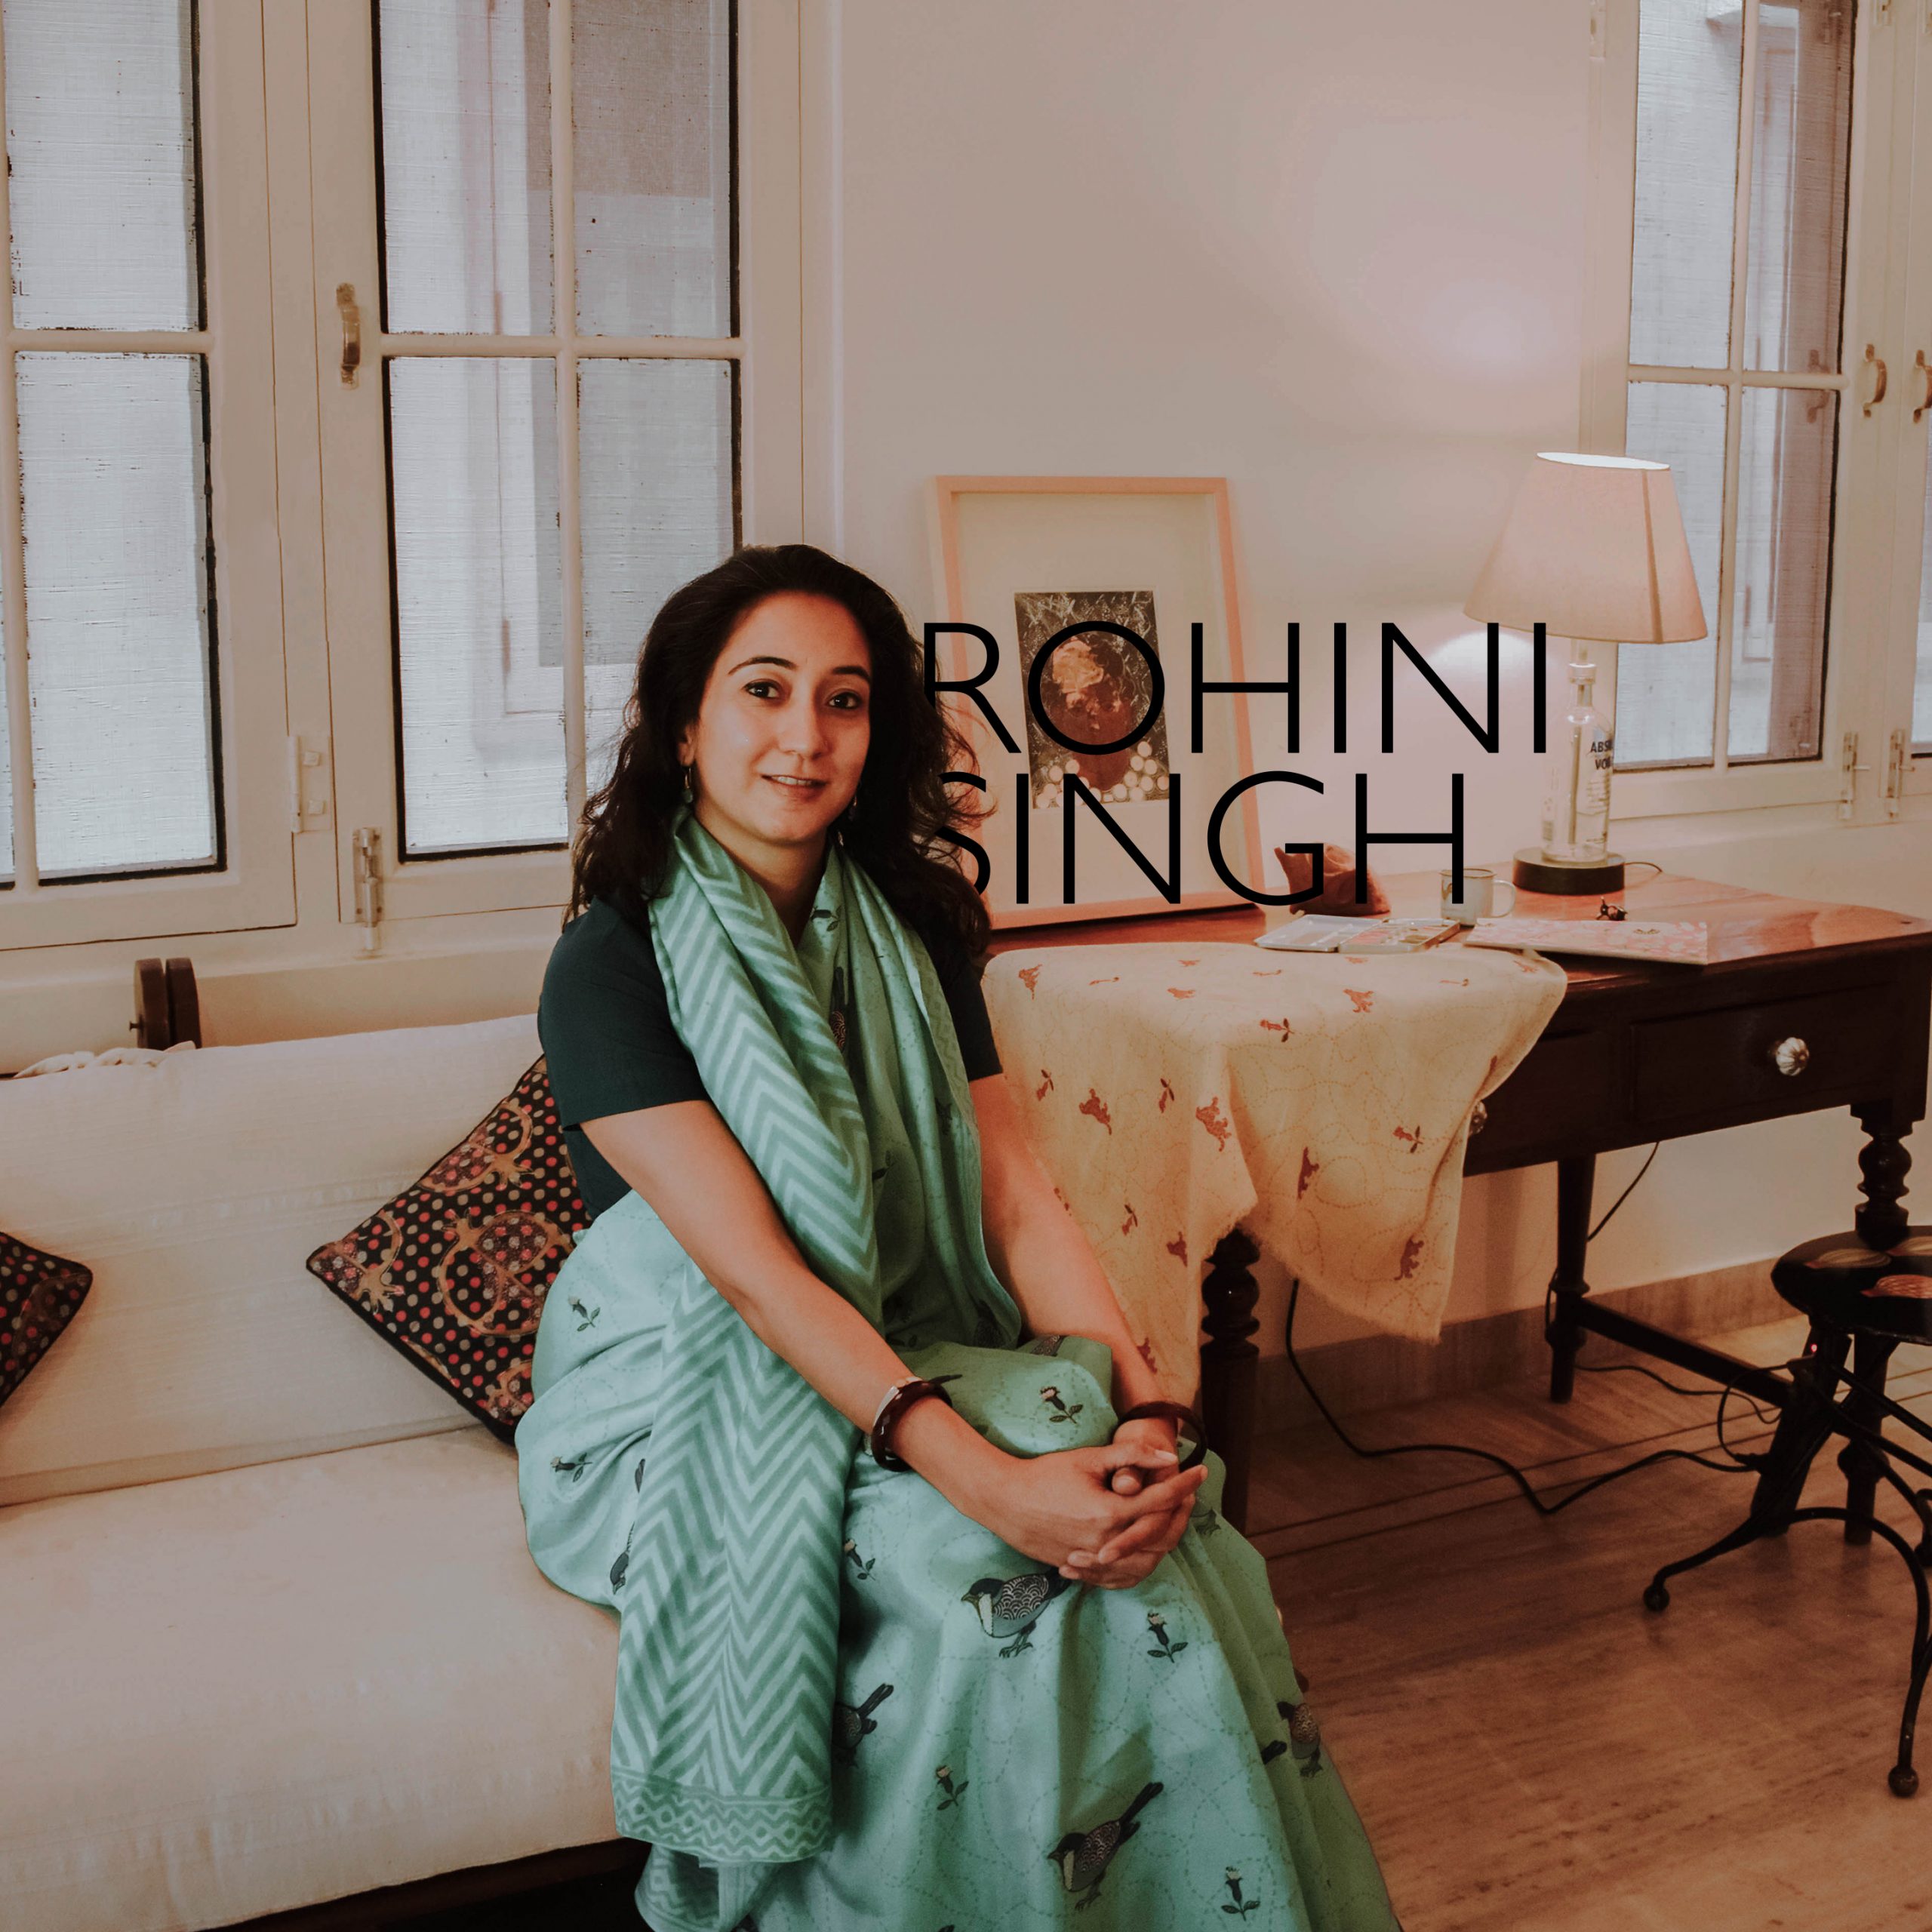 Rohini Singh